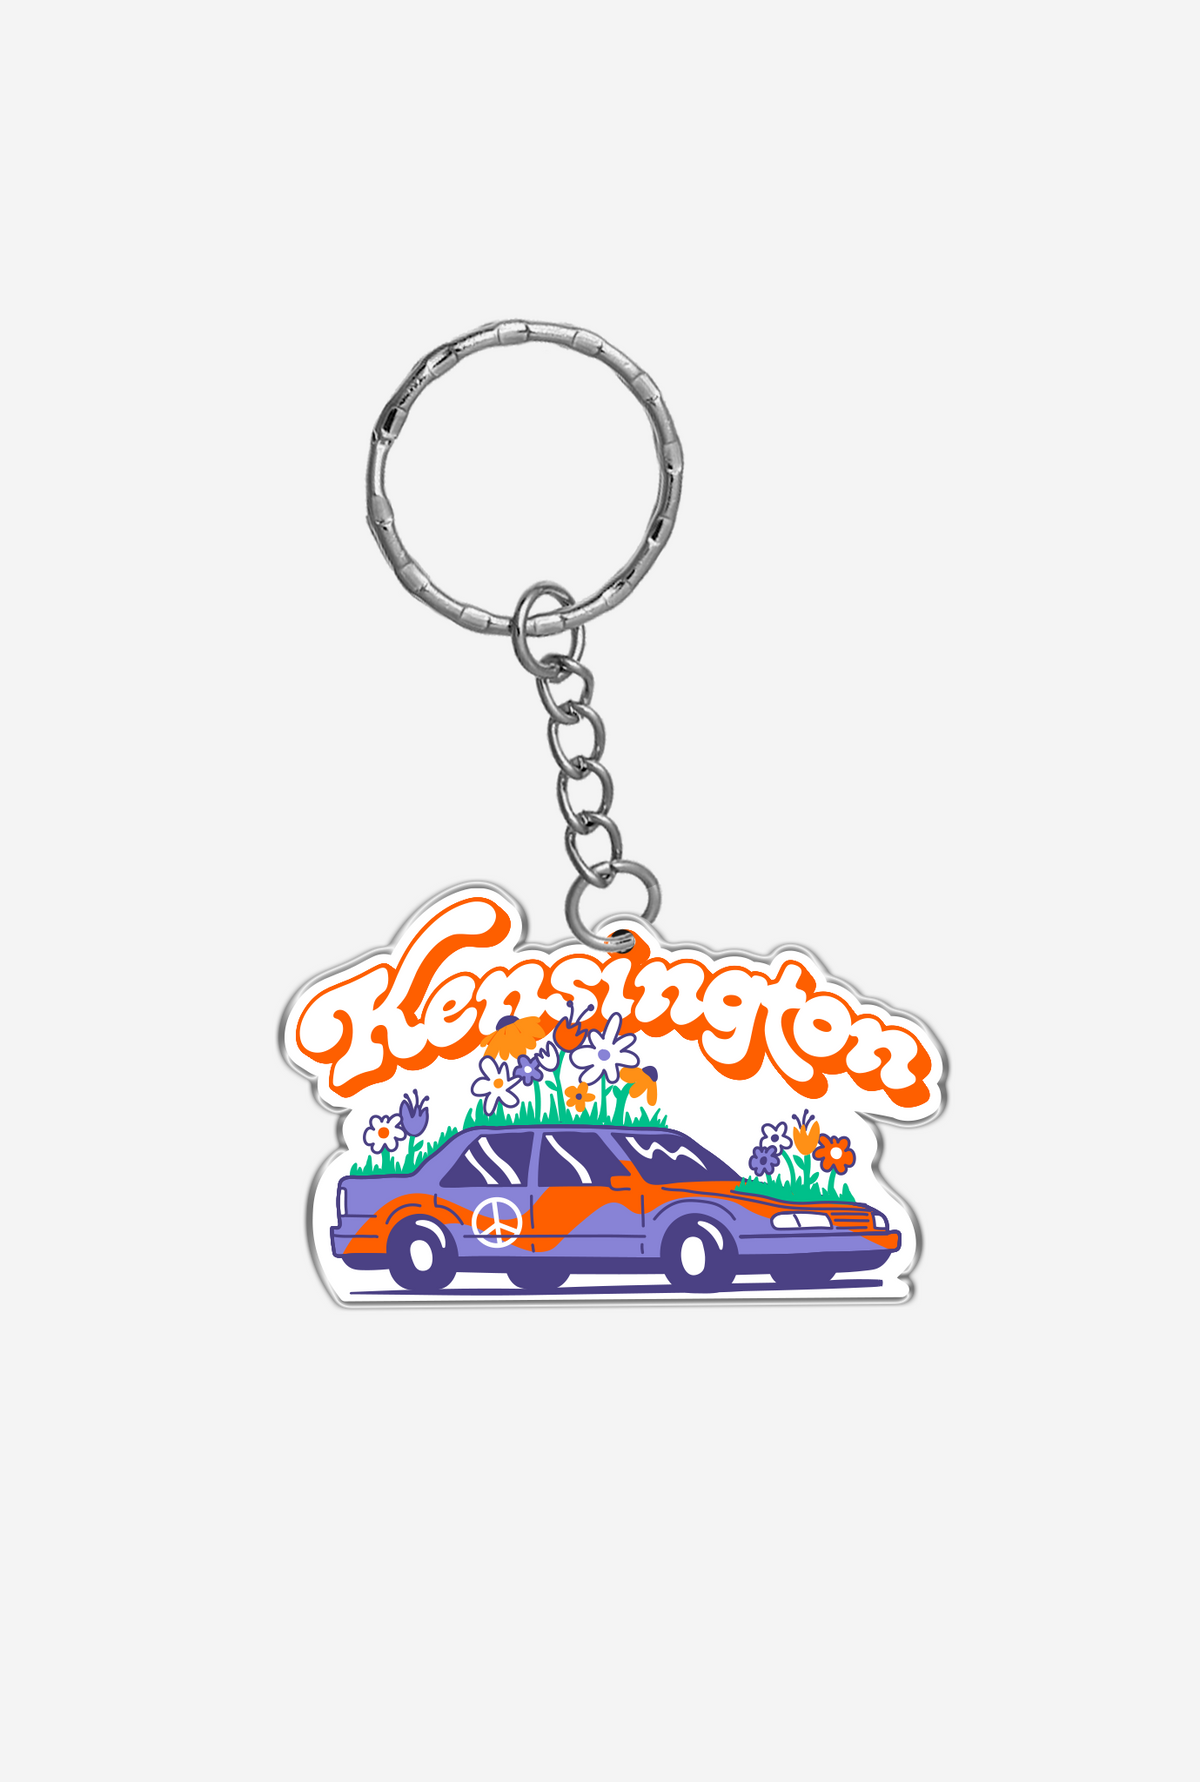 Kensington Market Car Keychain